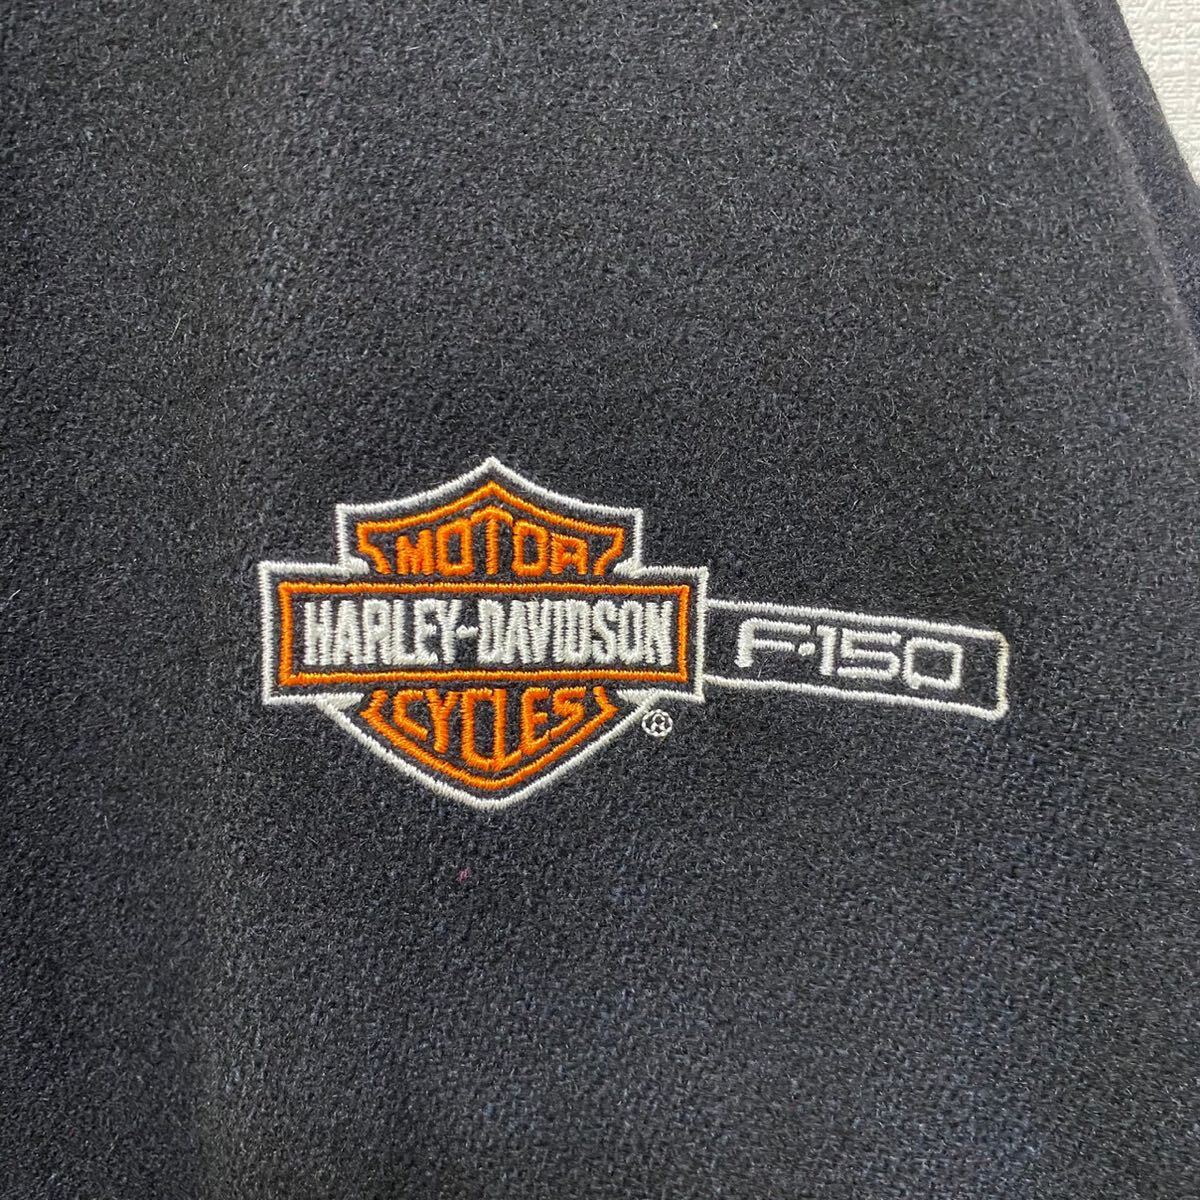 HARLEY-DAVIDSON Harley Davidson блузон куртка вышивка Logo балка and защита чёрный L размер 